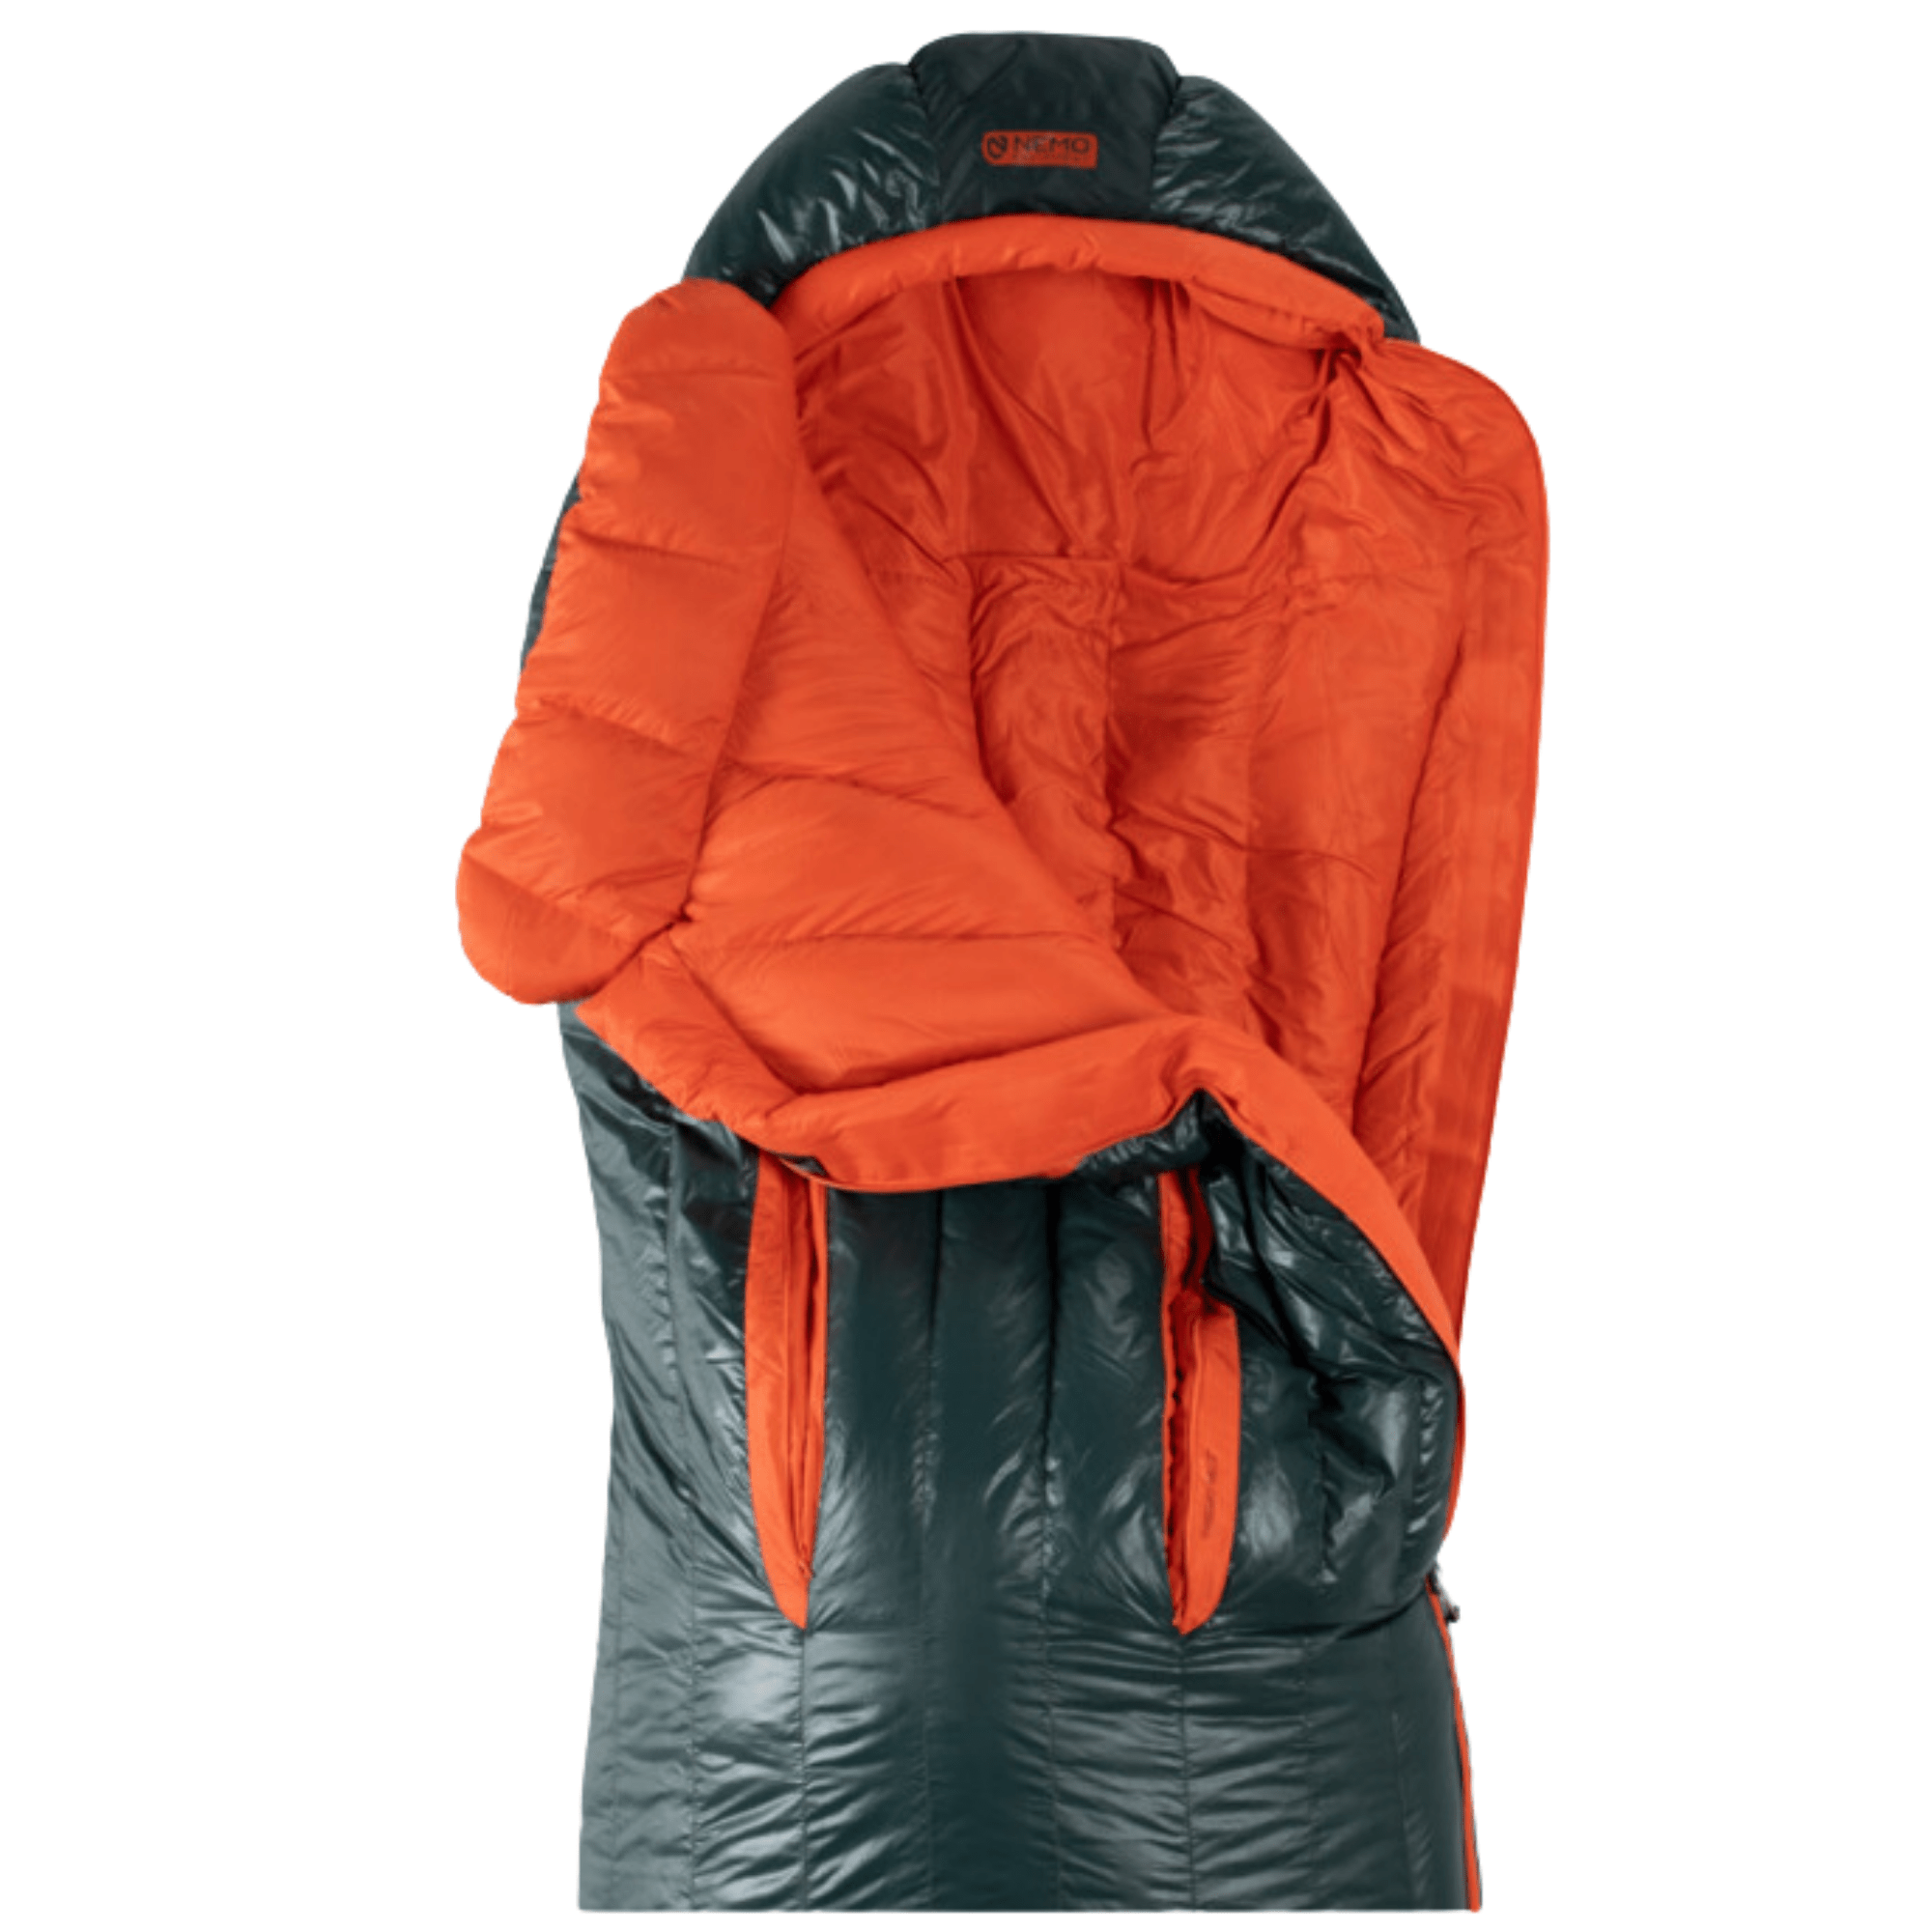 Nemo Sleeping Bag Riff Down (15°F / -9°C) Sleeping Bag